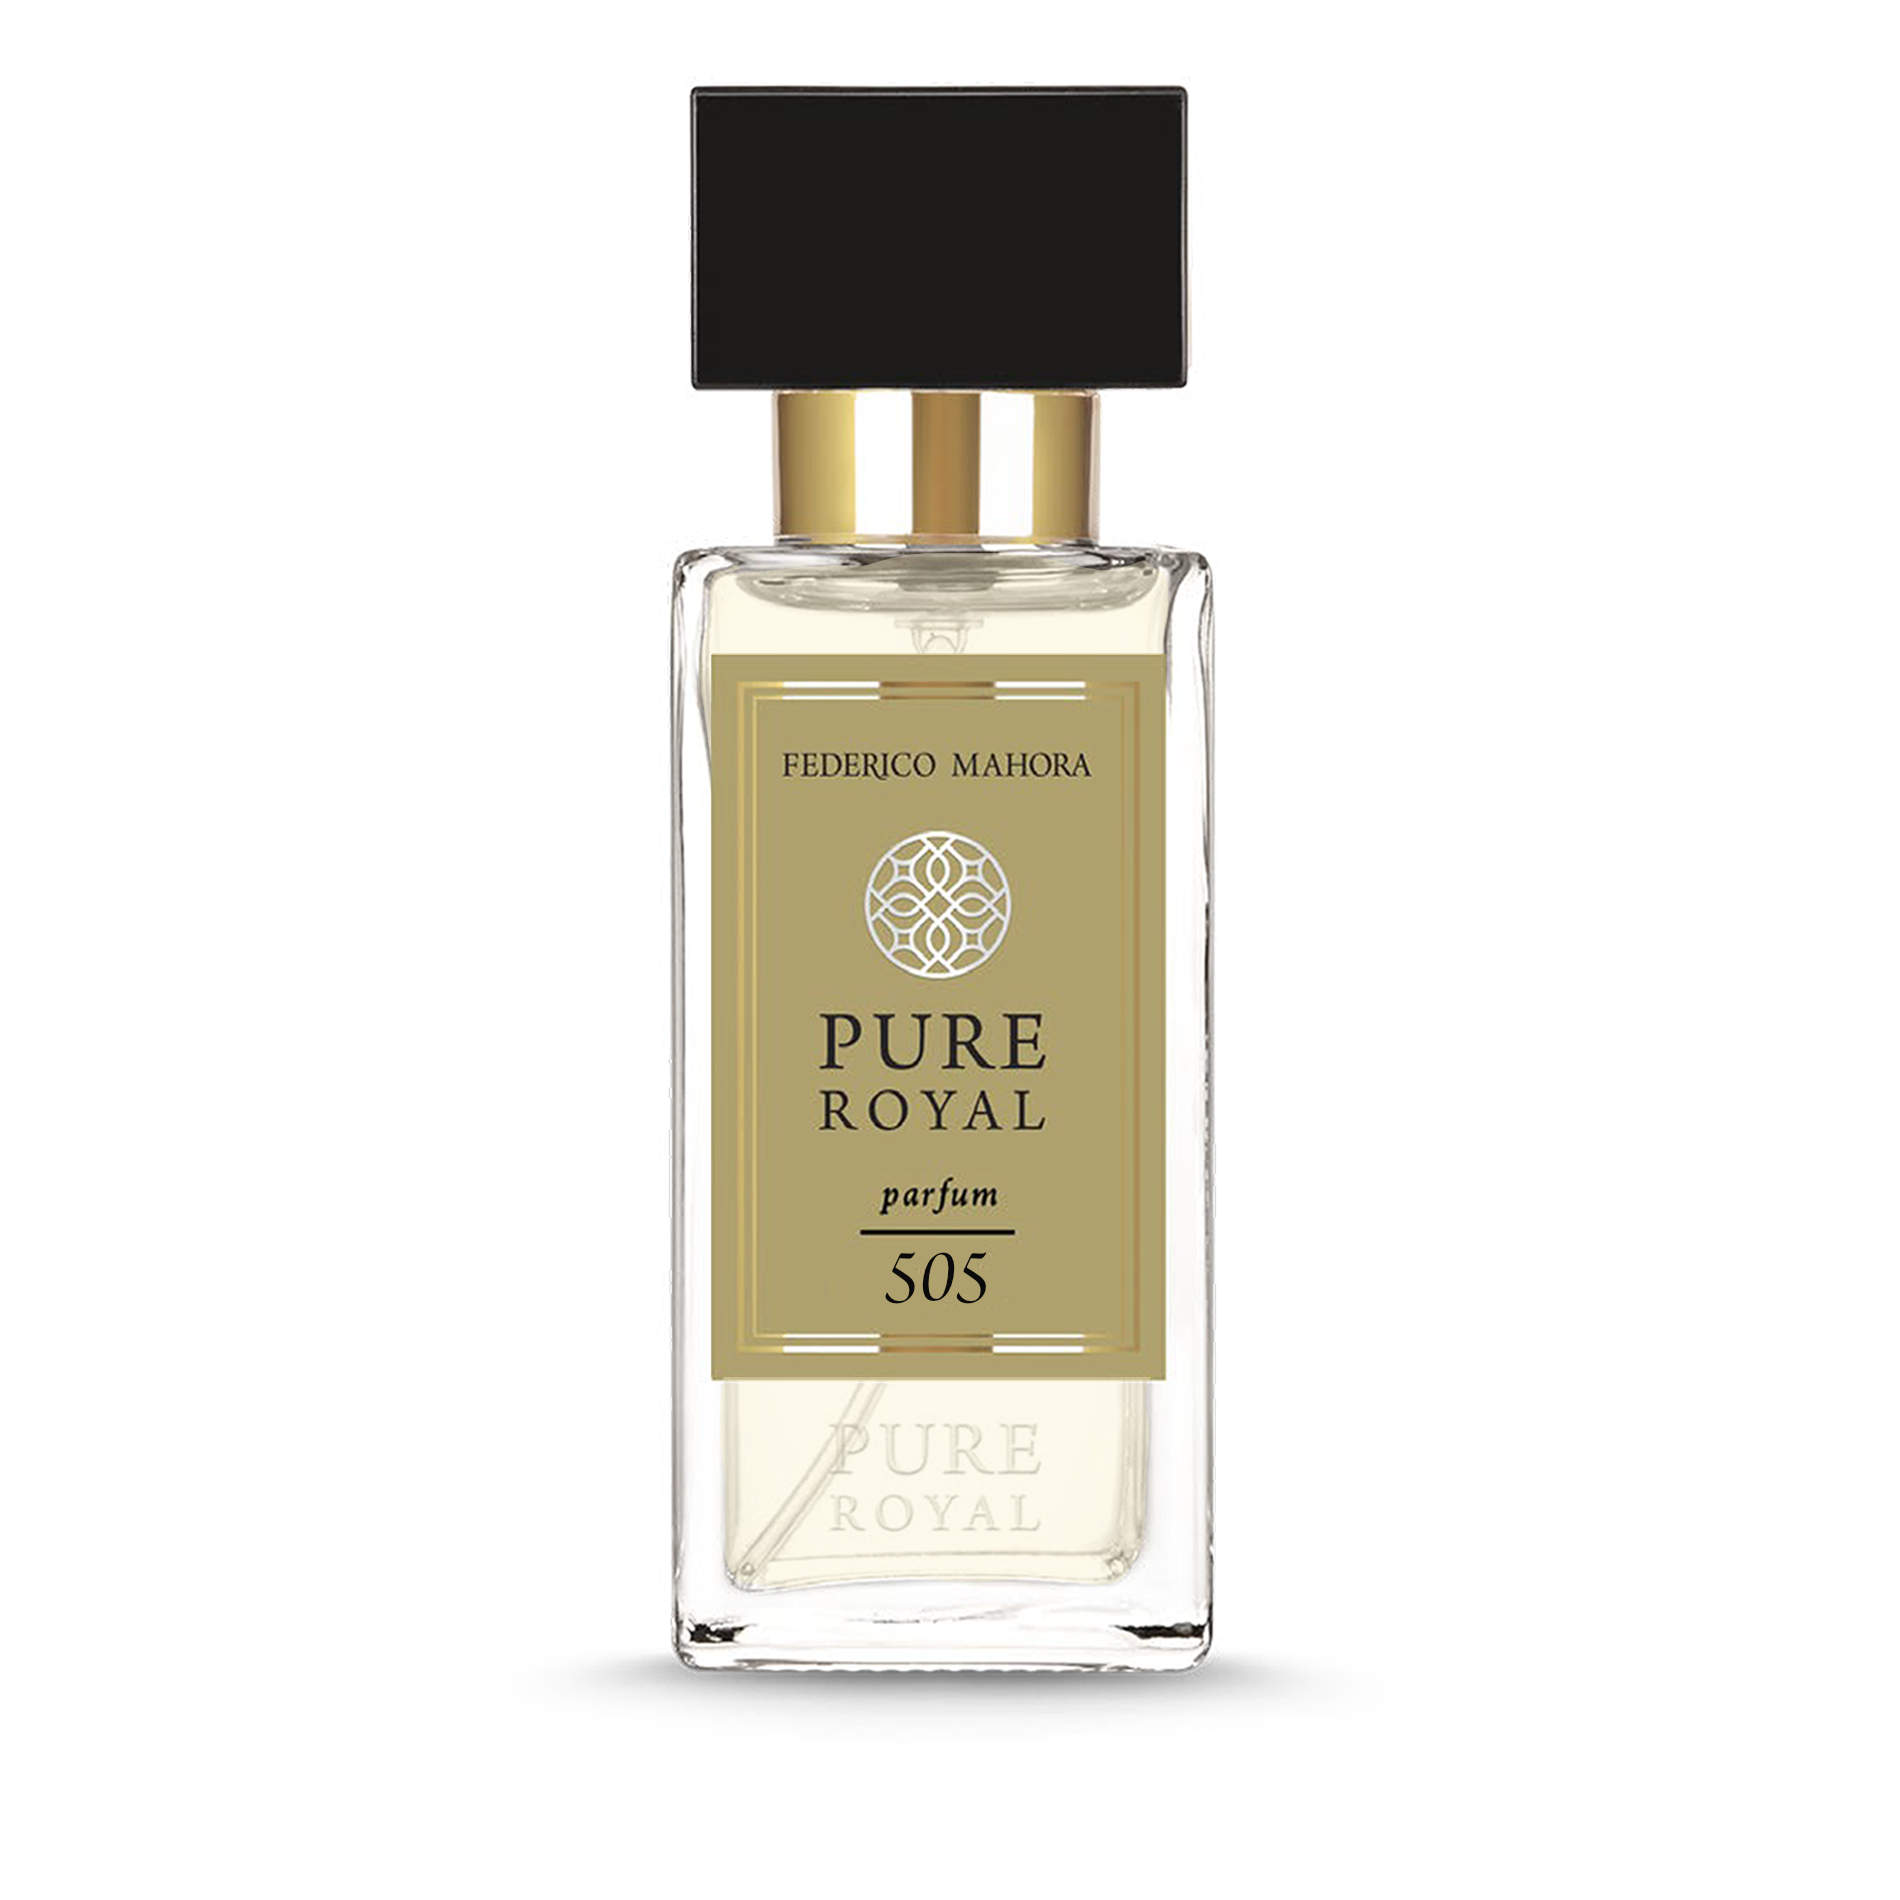 PURE ROYAL 505 GOLDEN Edition Parfum Federico Mahora